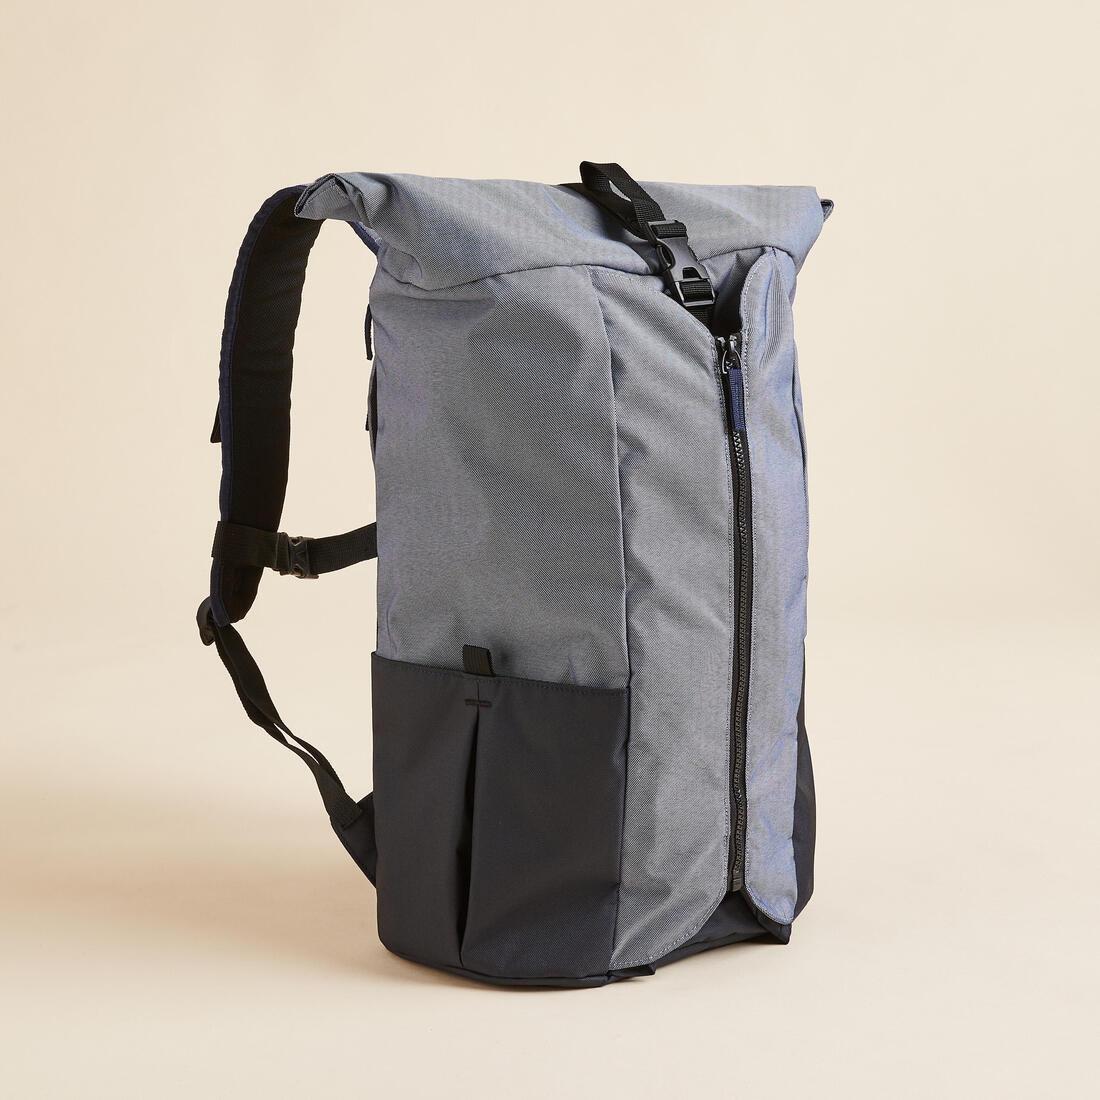 KIMJALY Yoga Mat Backpack - Blue/Grey, Iced coffee